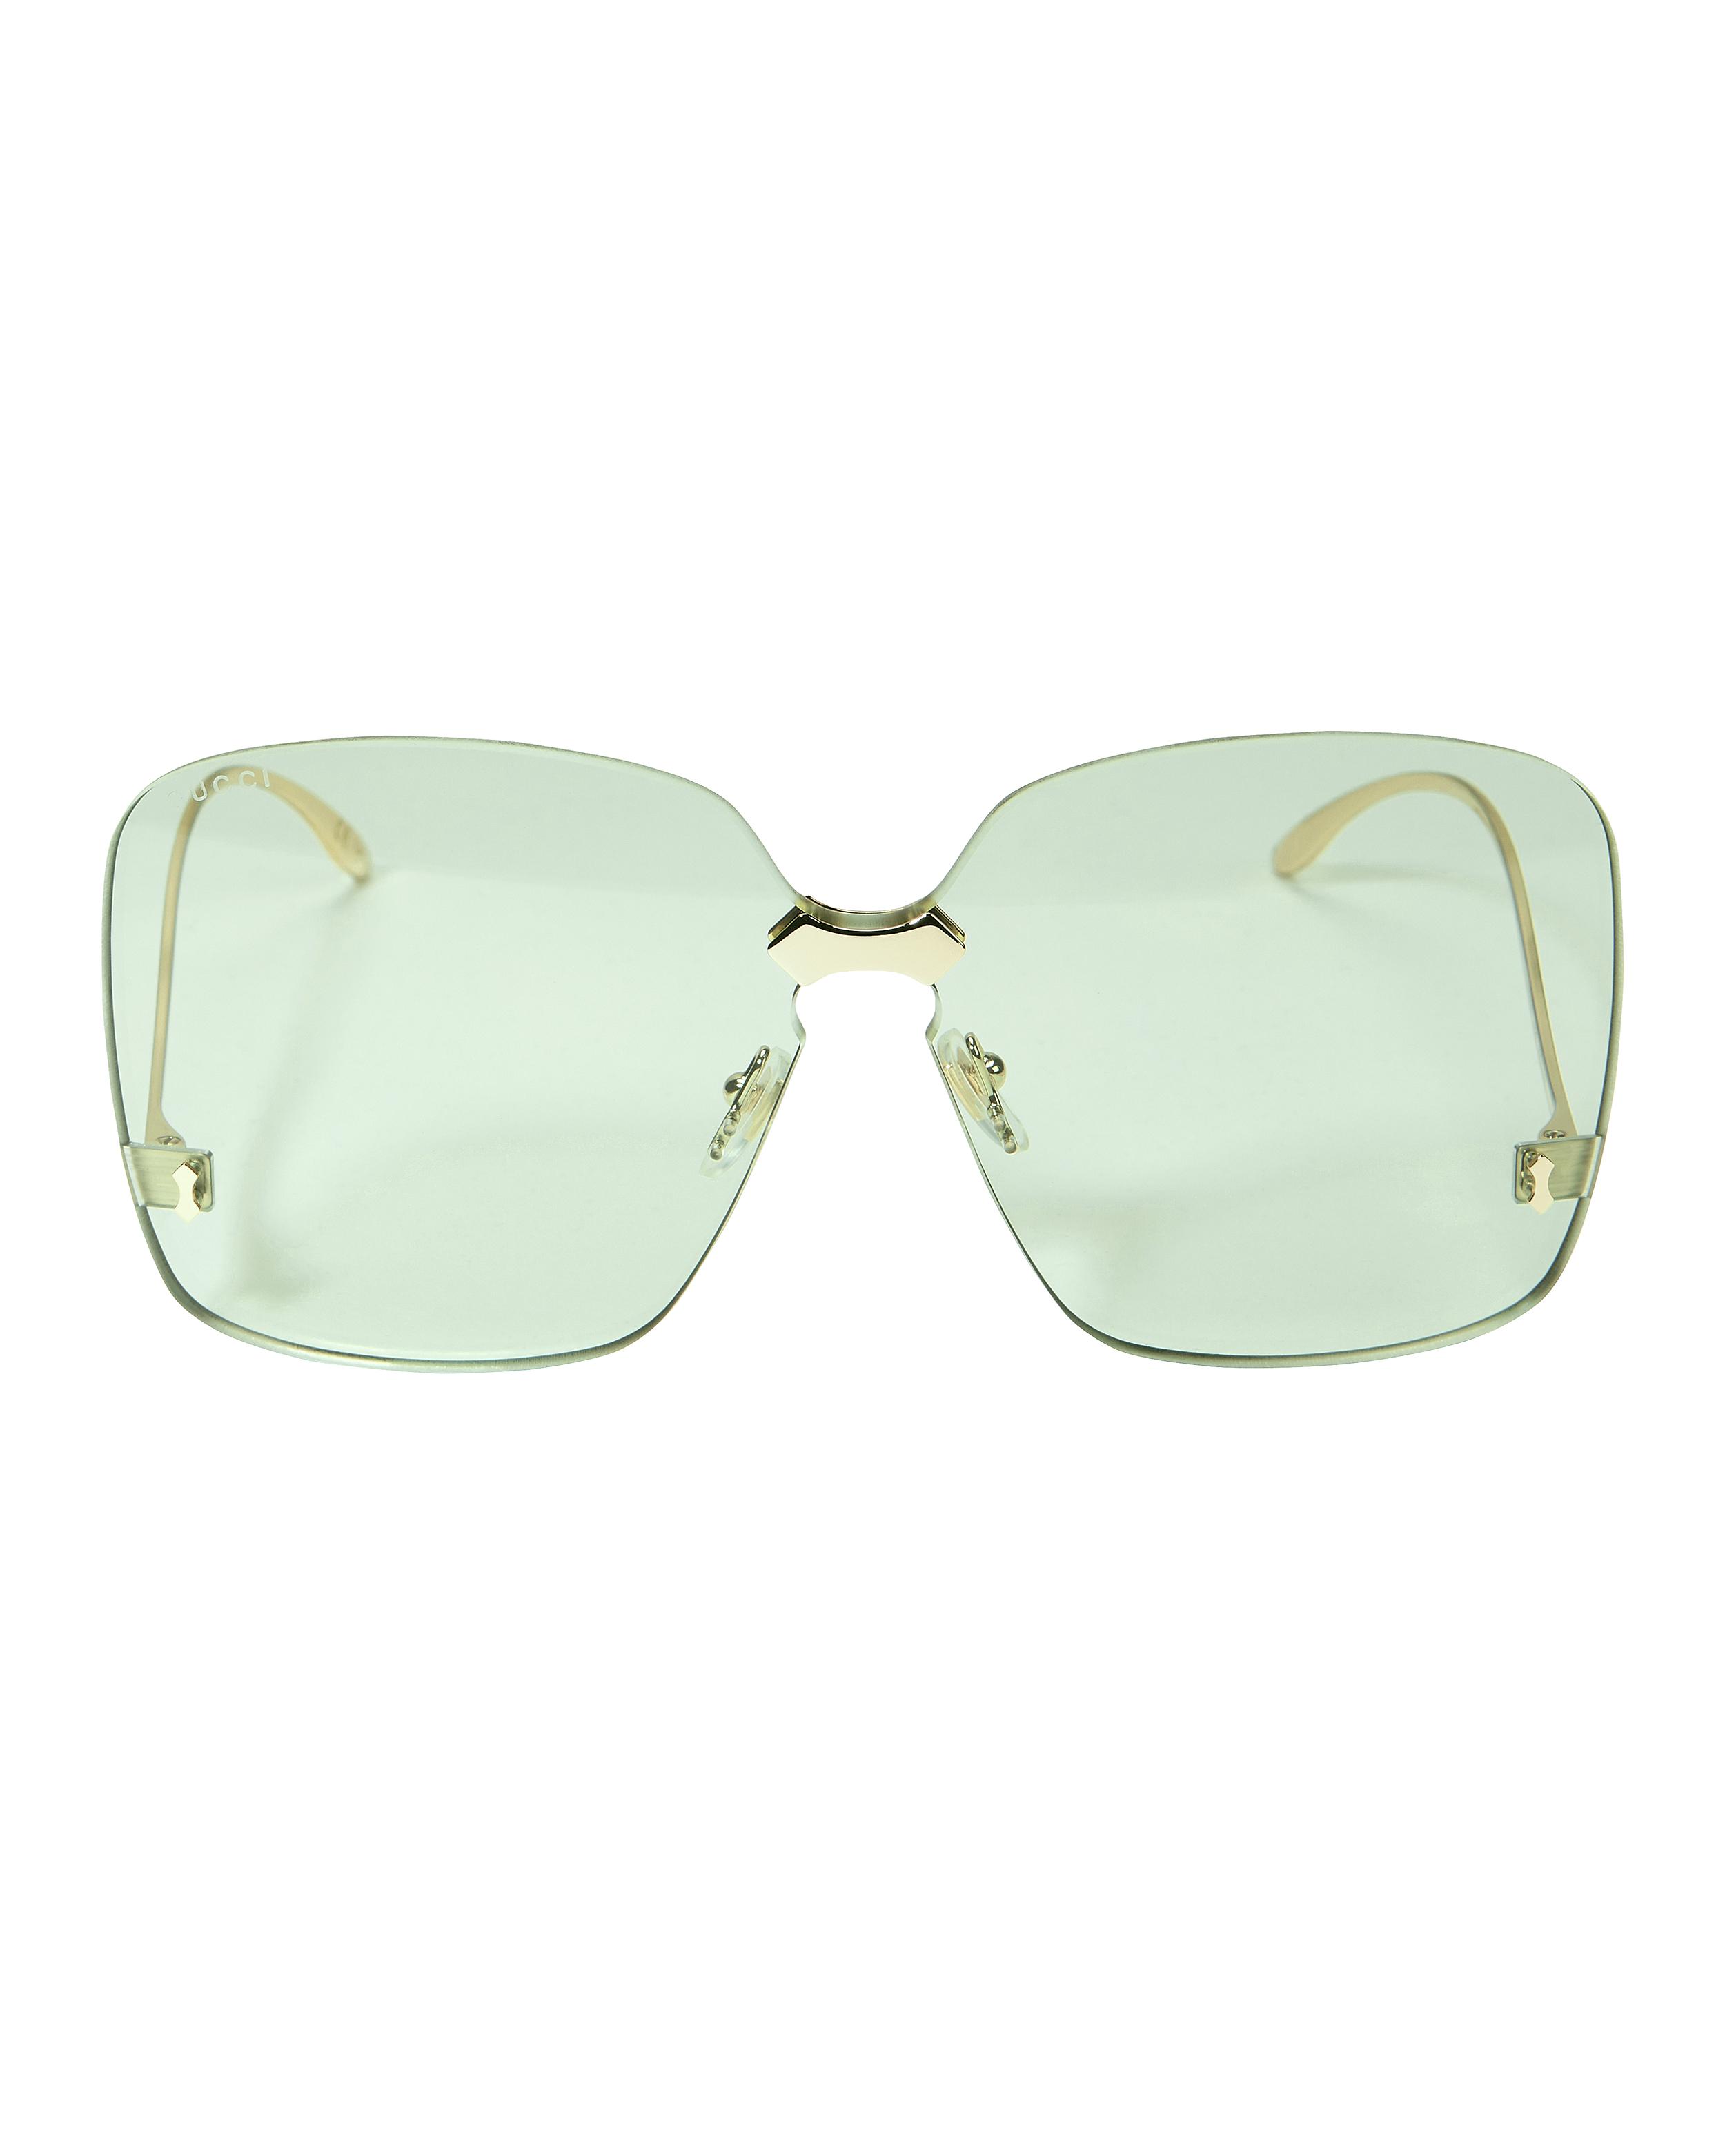 Gucci GG0879S 61 Green & Gold Sunglasses | Sunglass Hut USA